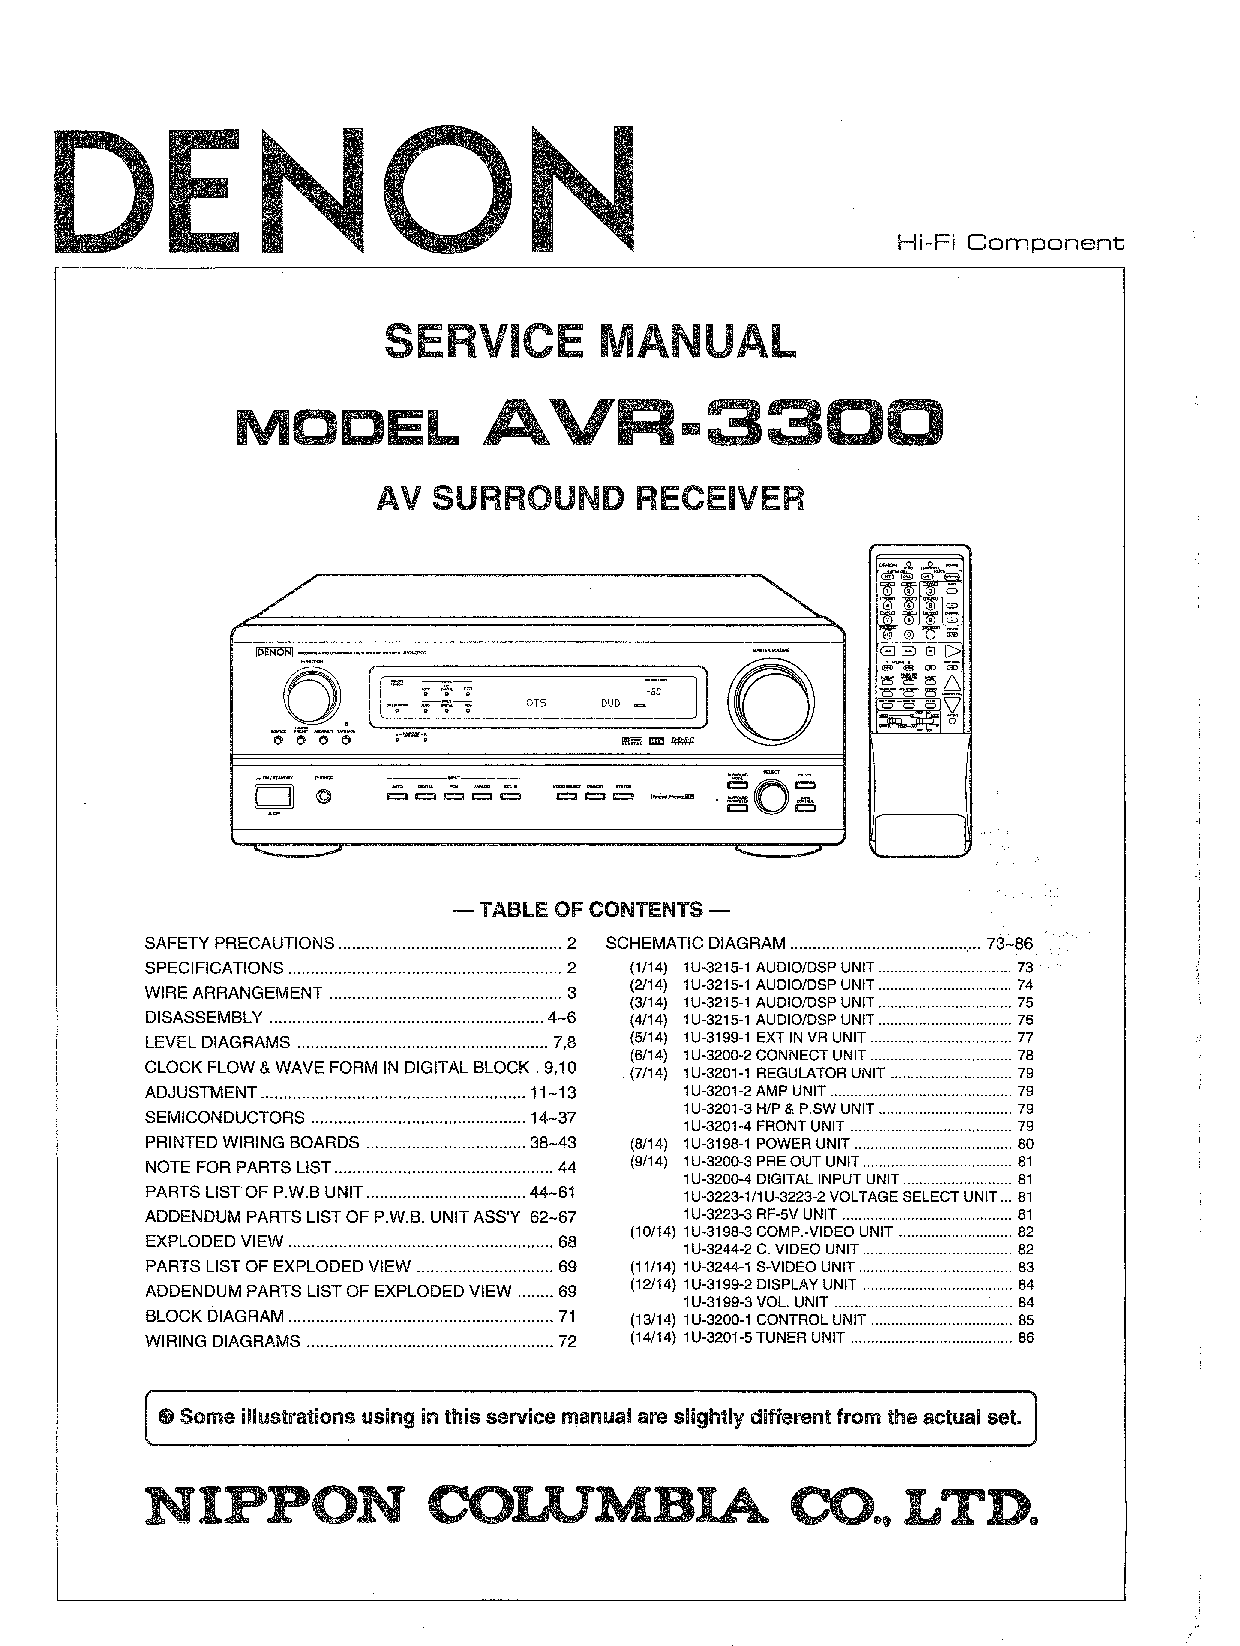 Denon AVR3300 Service Manual